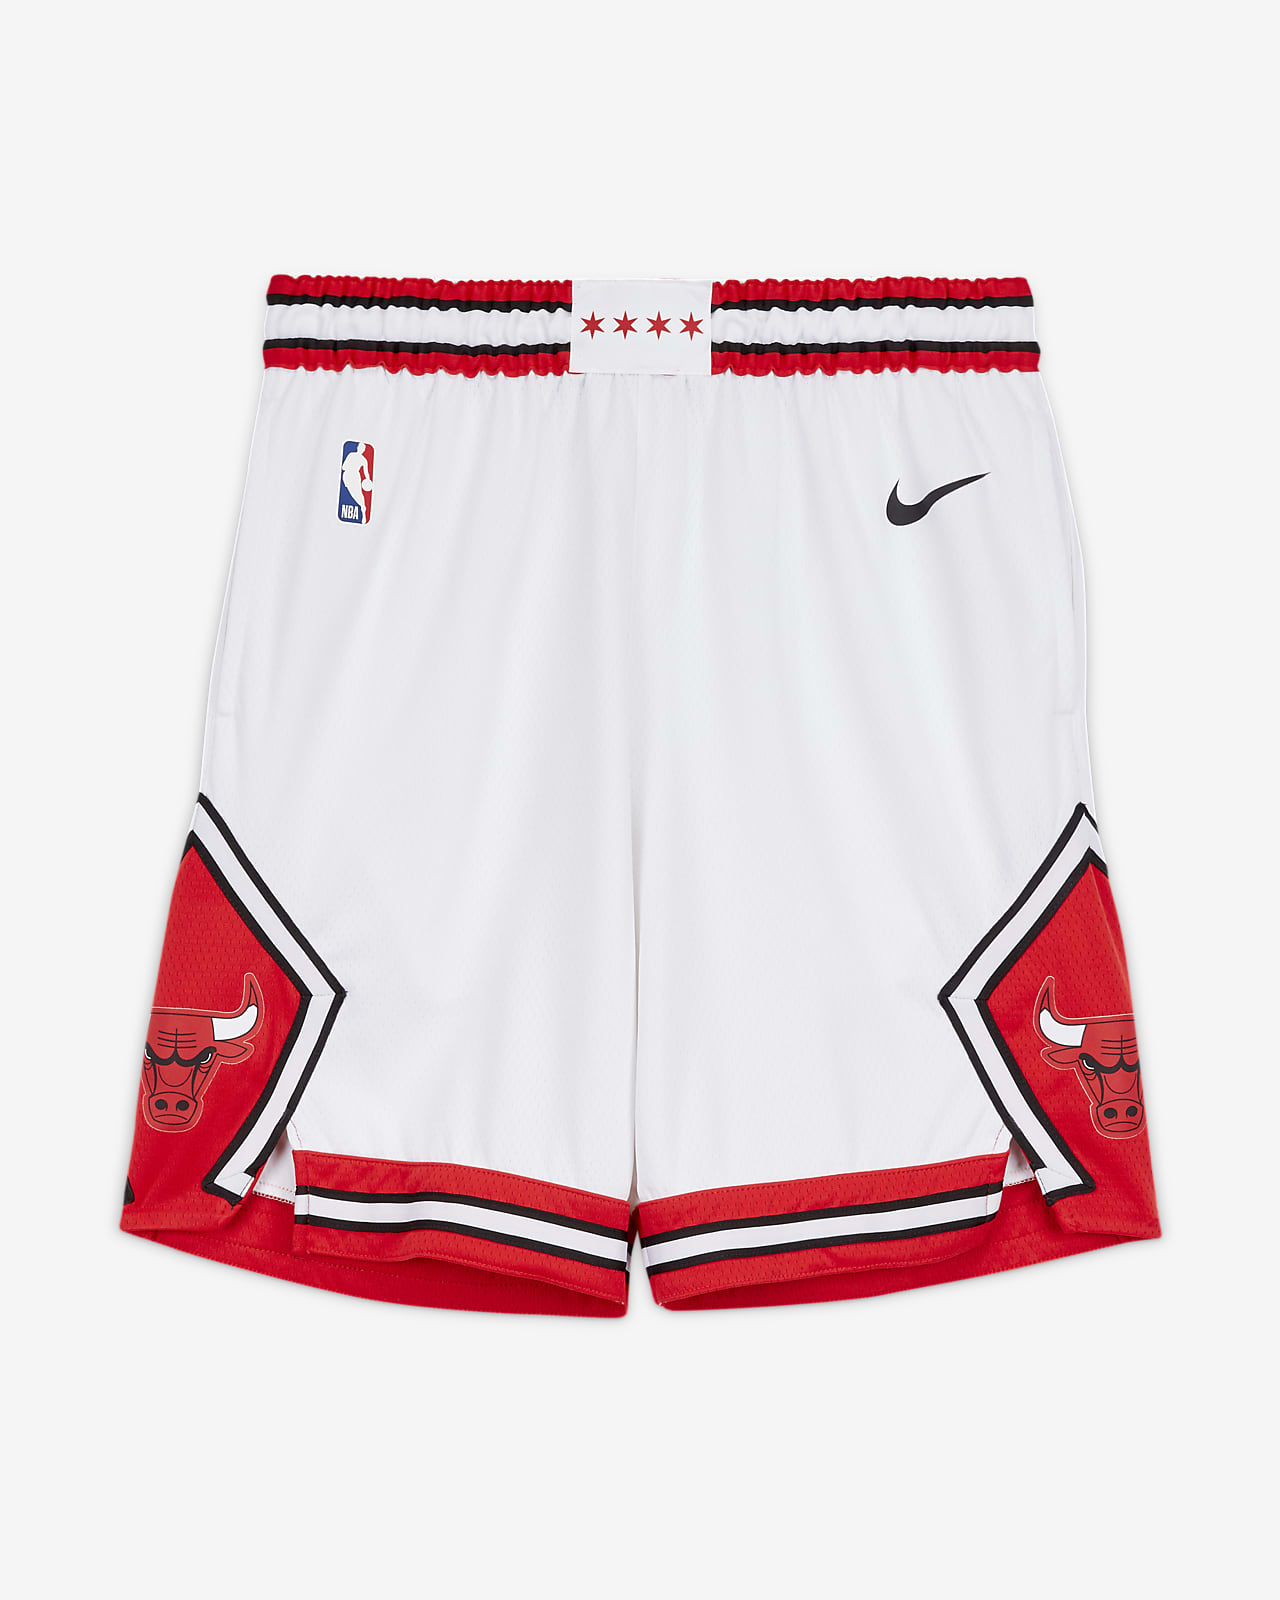 Chicago Bulls Association Edition Pantalón corto Swingman Nike de la NBA - Hombre